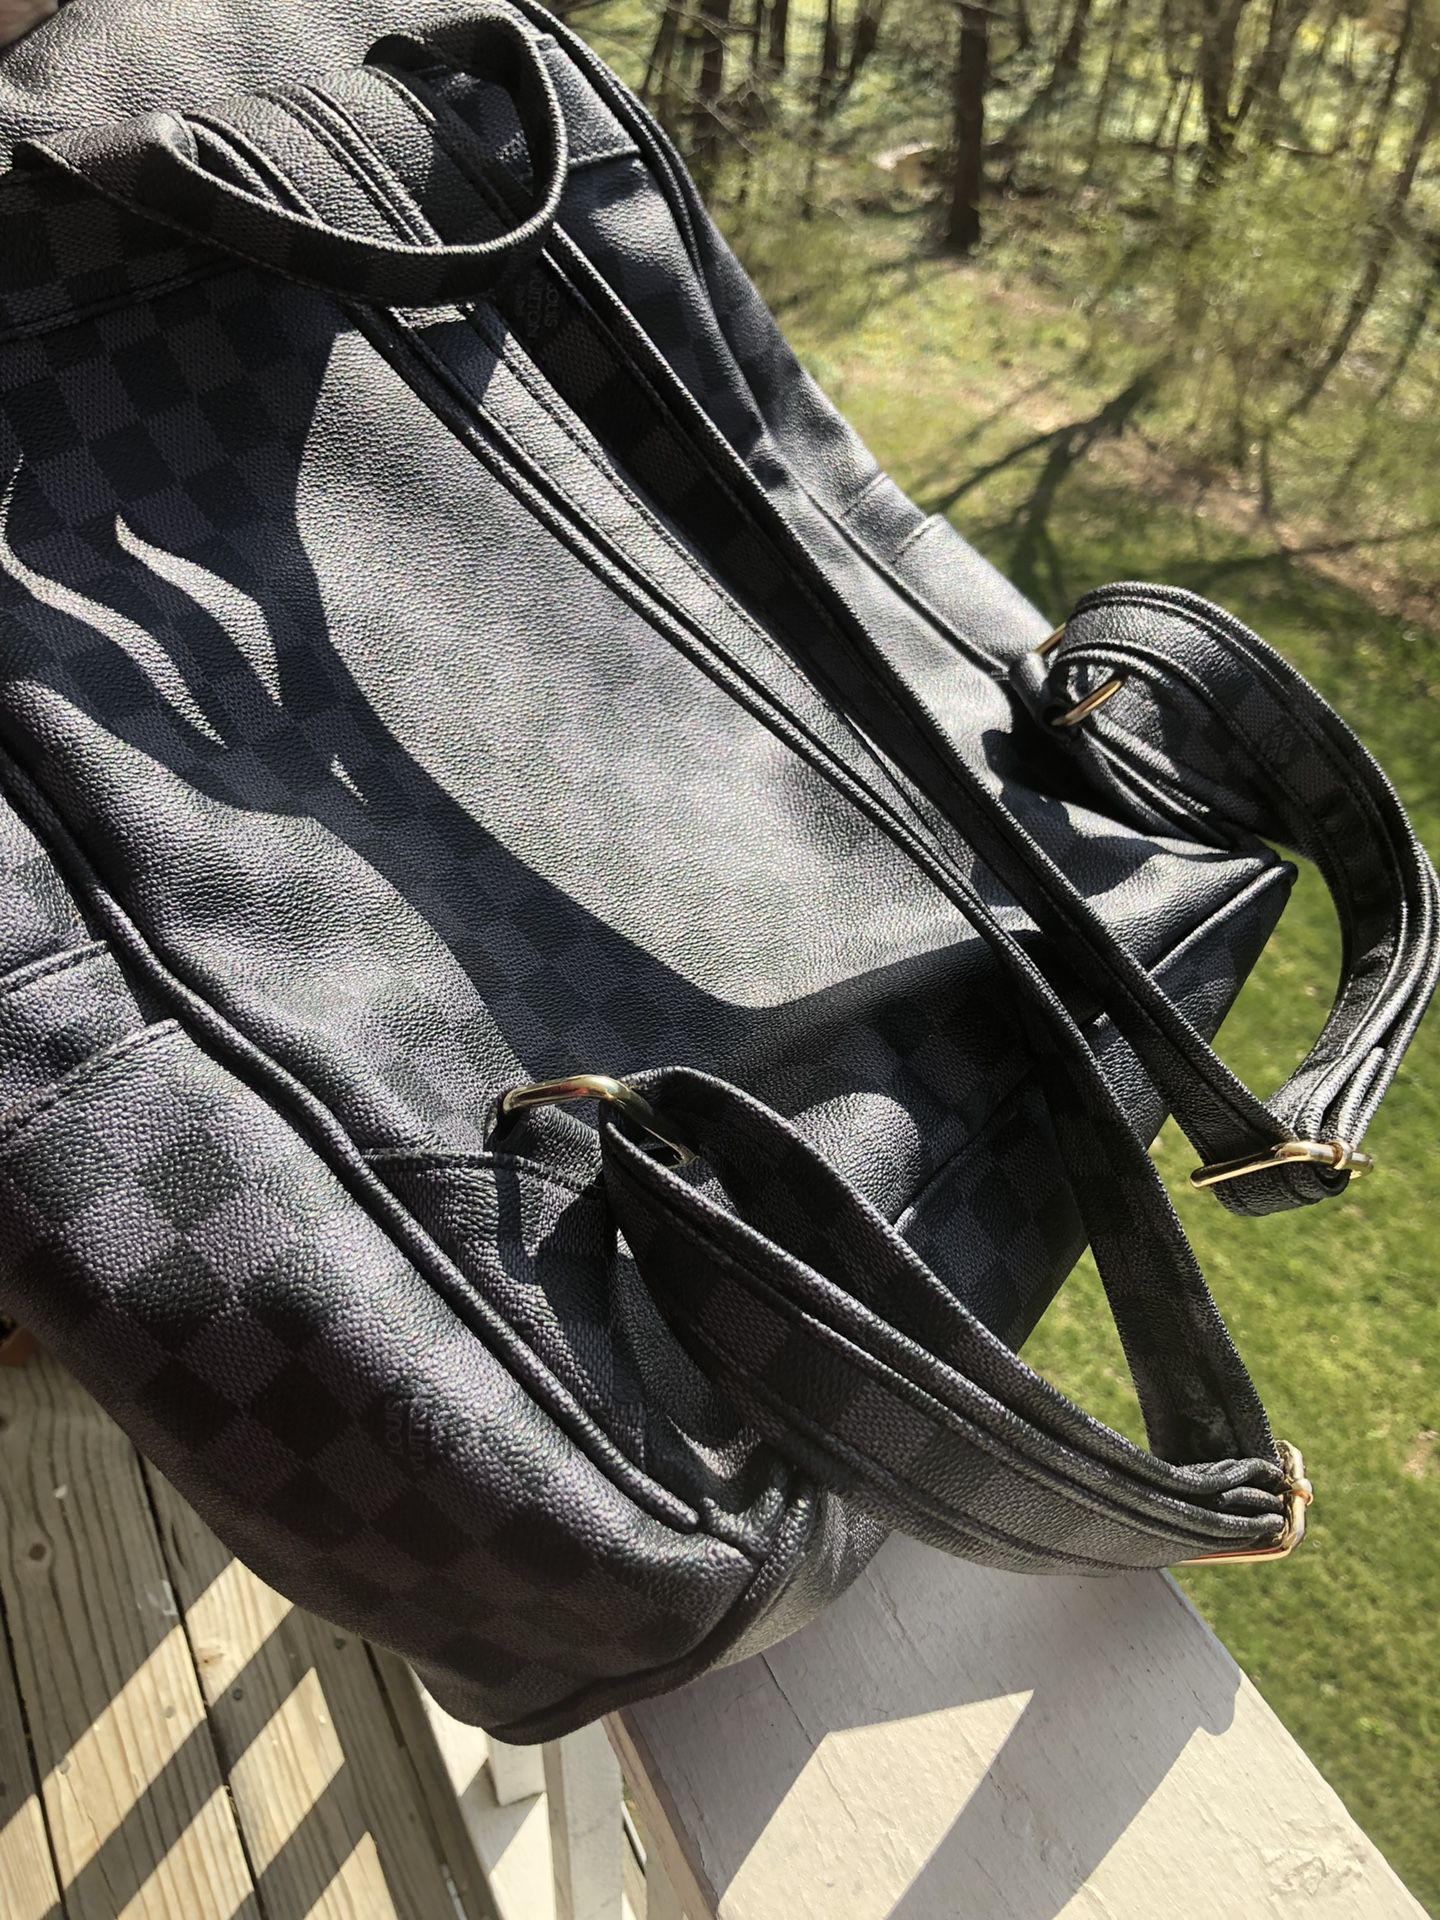 Louis Vuitton Damier Graphite Josh Backpack for Sale in Virginia Beach, VA  - OfferUp